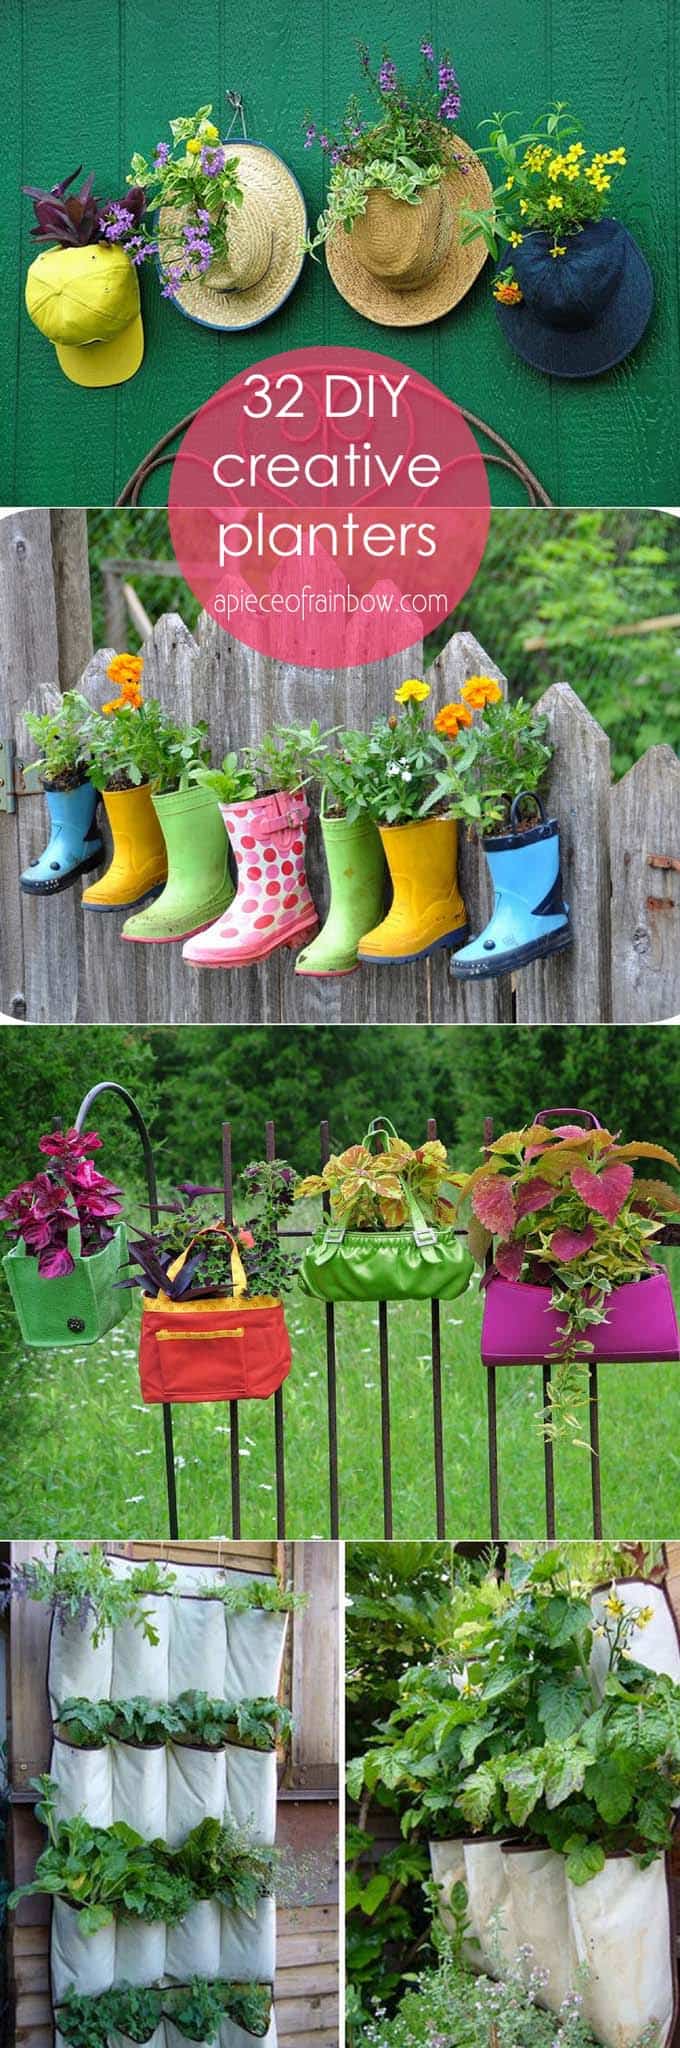 32-creative-DIY-planters-apieceofrainbowblog (2)